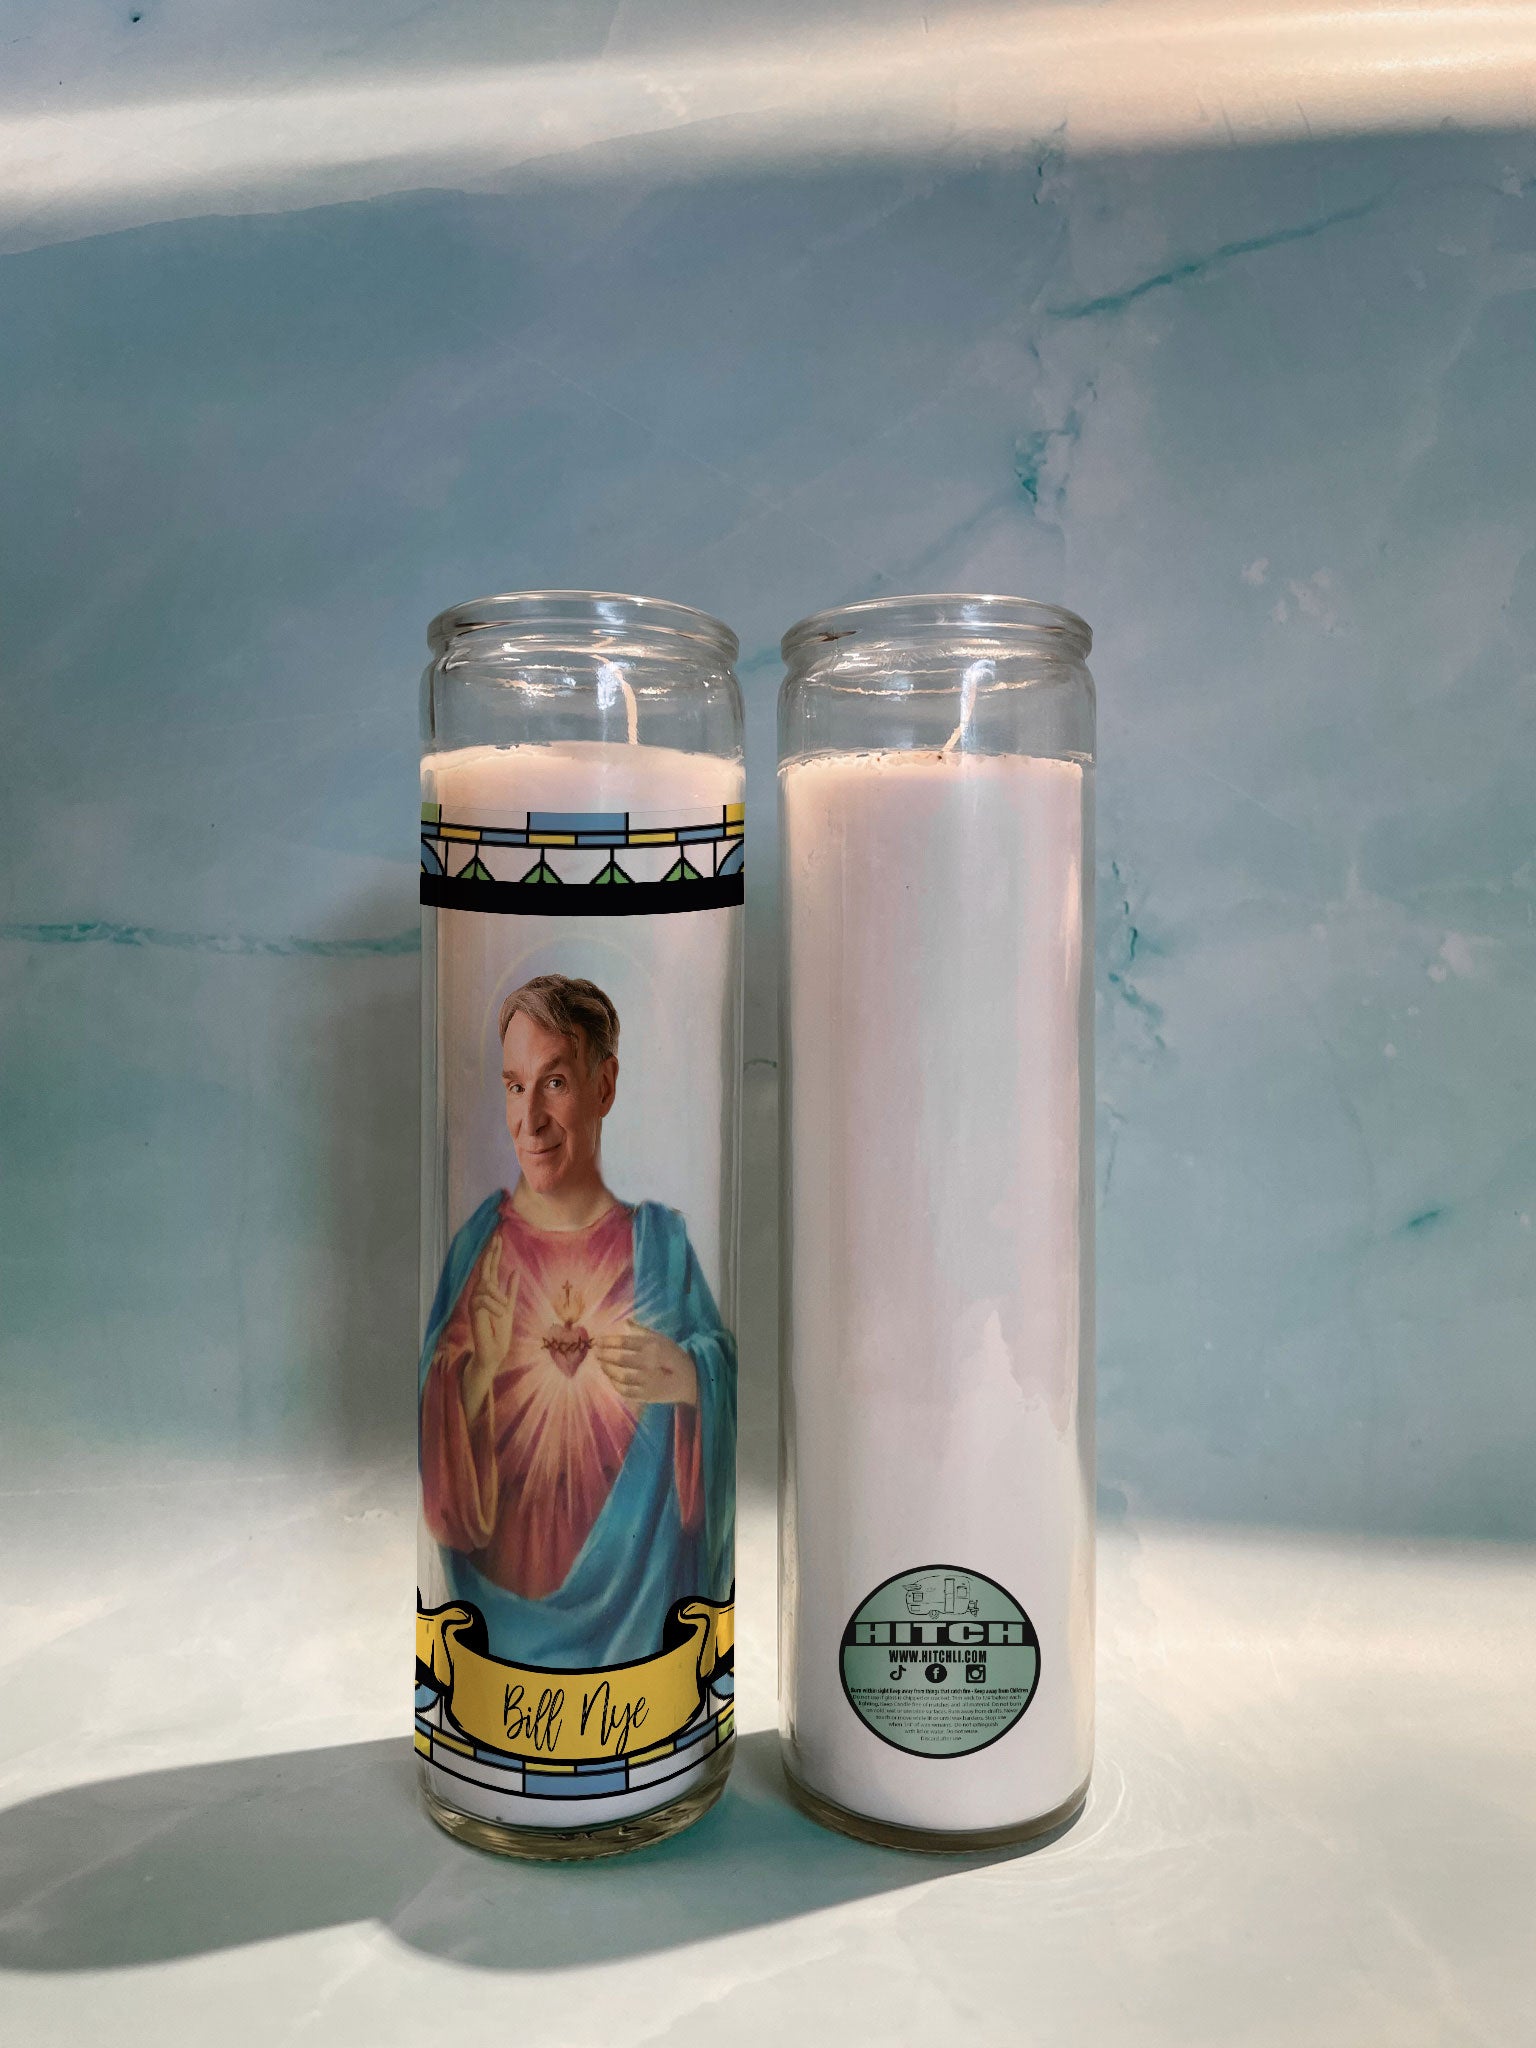 Bill Nye Original Prayer Candle